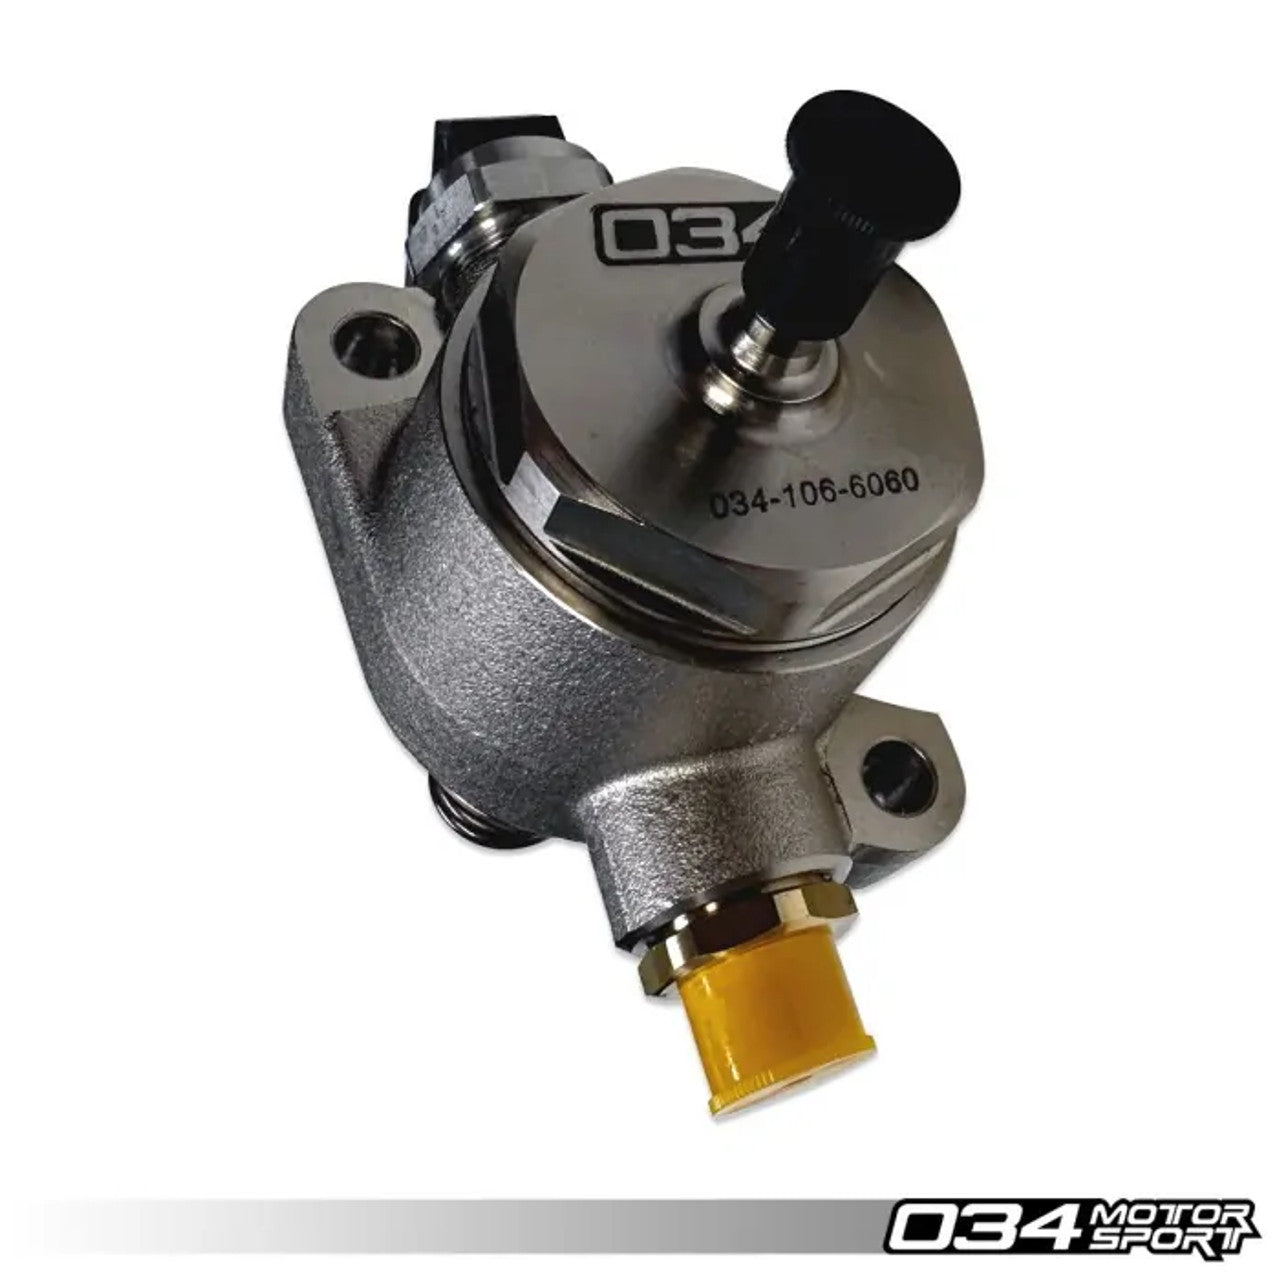 034Motorsport High Pressure Fuel Pump Upgrade - 2.0T EA888 Gen3 - Wayside Performance